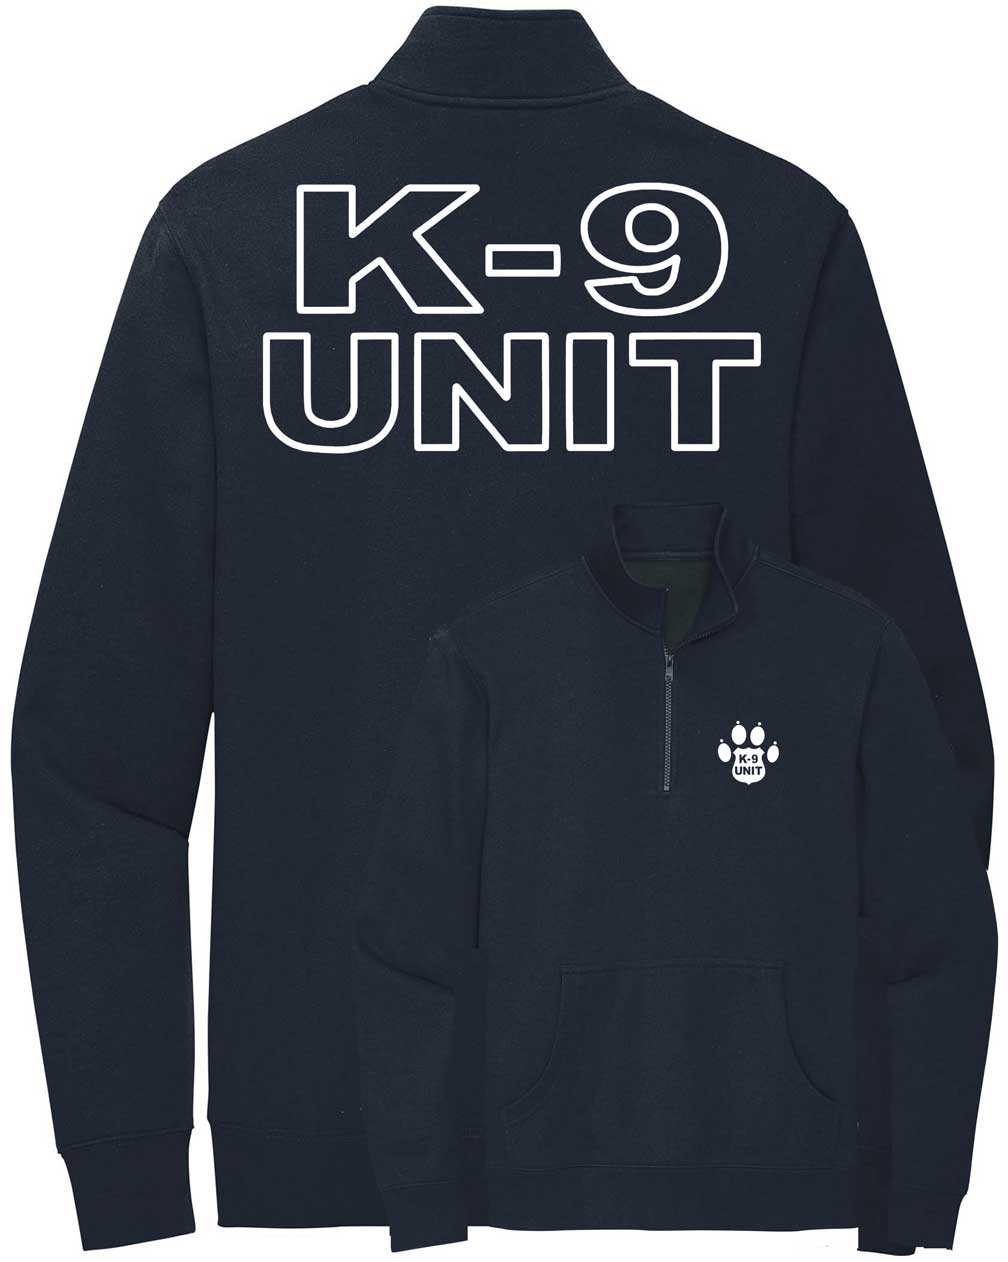 k-9-unit-quarter-zip-navy.jpg